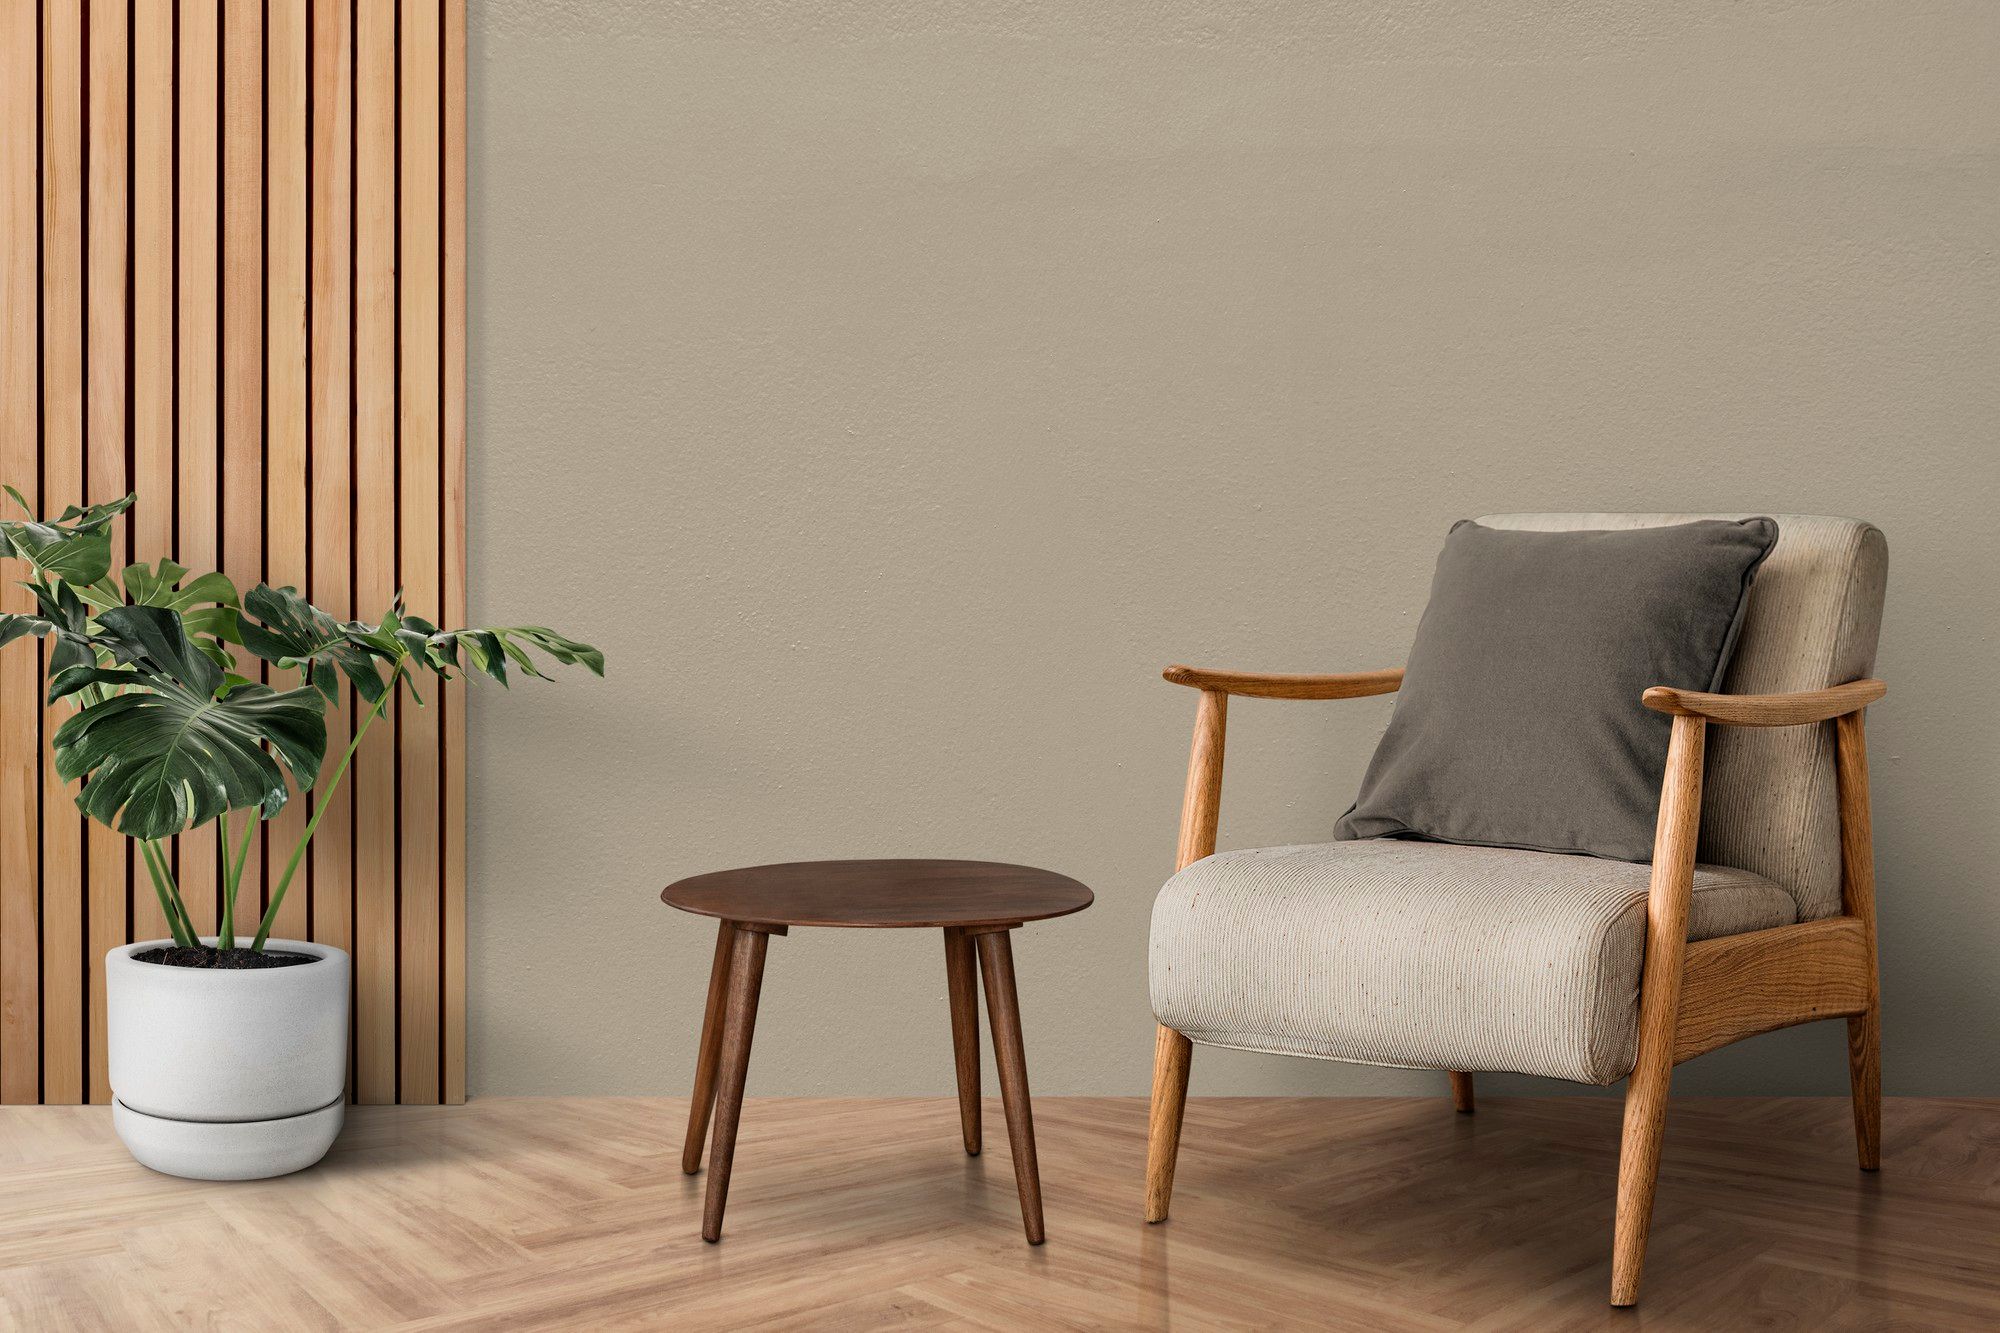 Minimalistic and modern living room